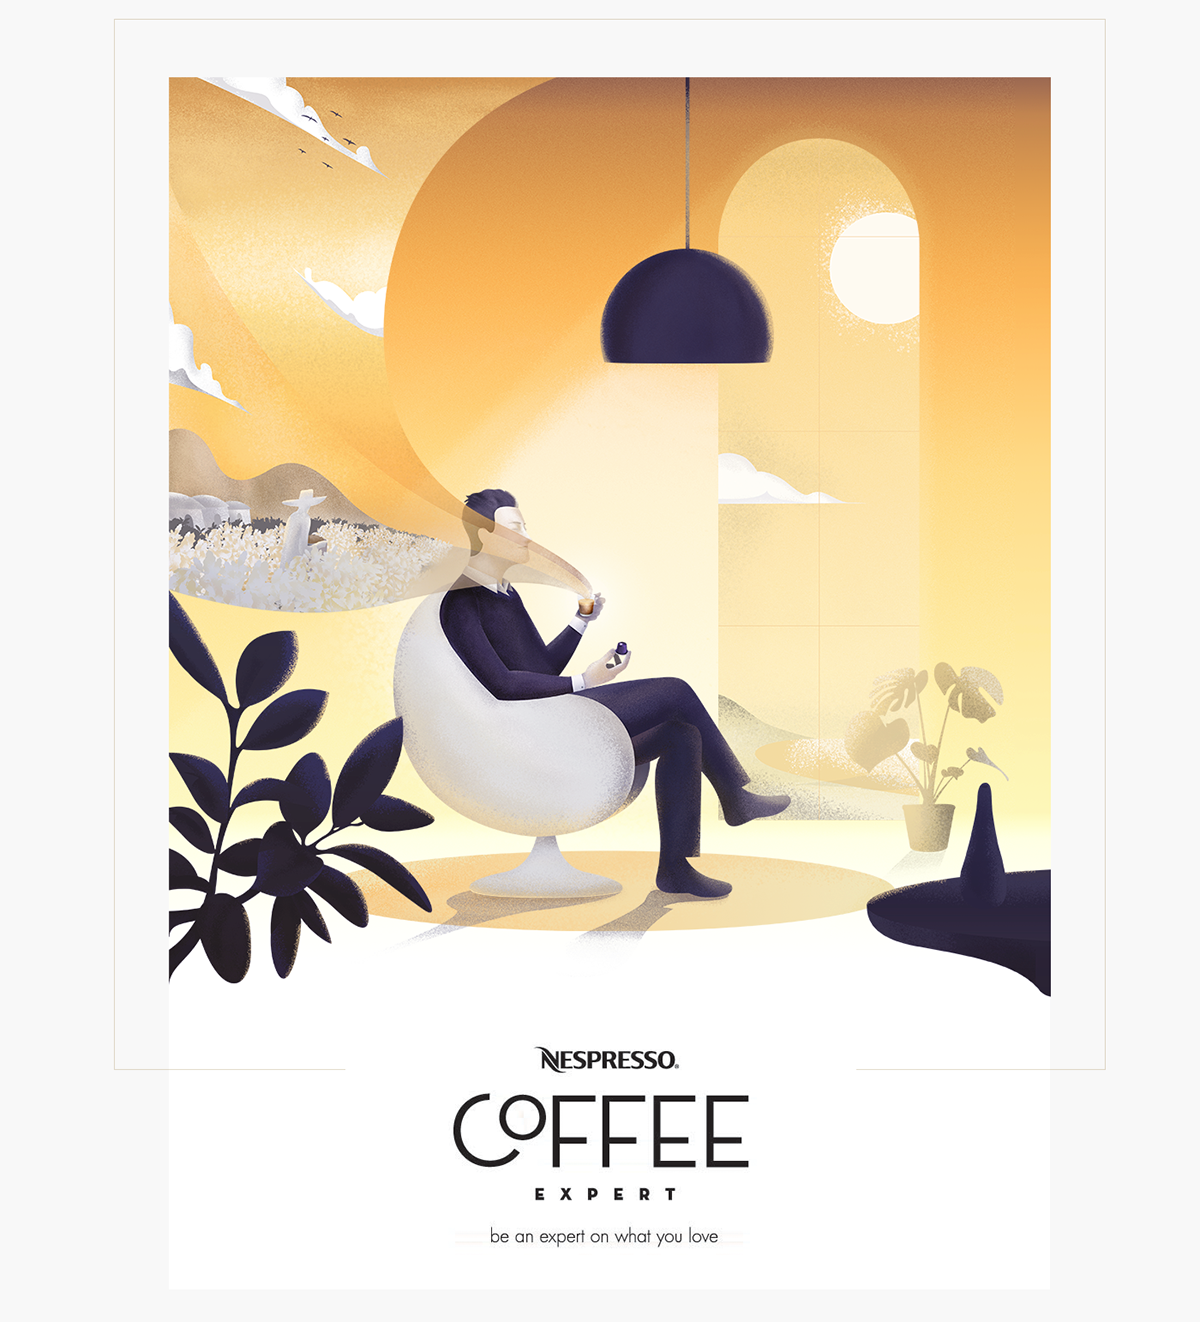 Website campaign ILLUSTRATION  Coffee Nespresso expert espresso cafe Brazil